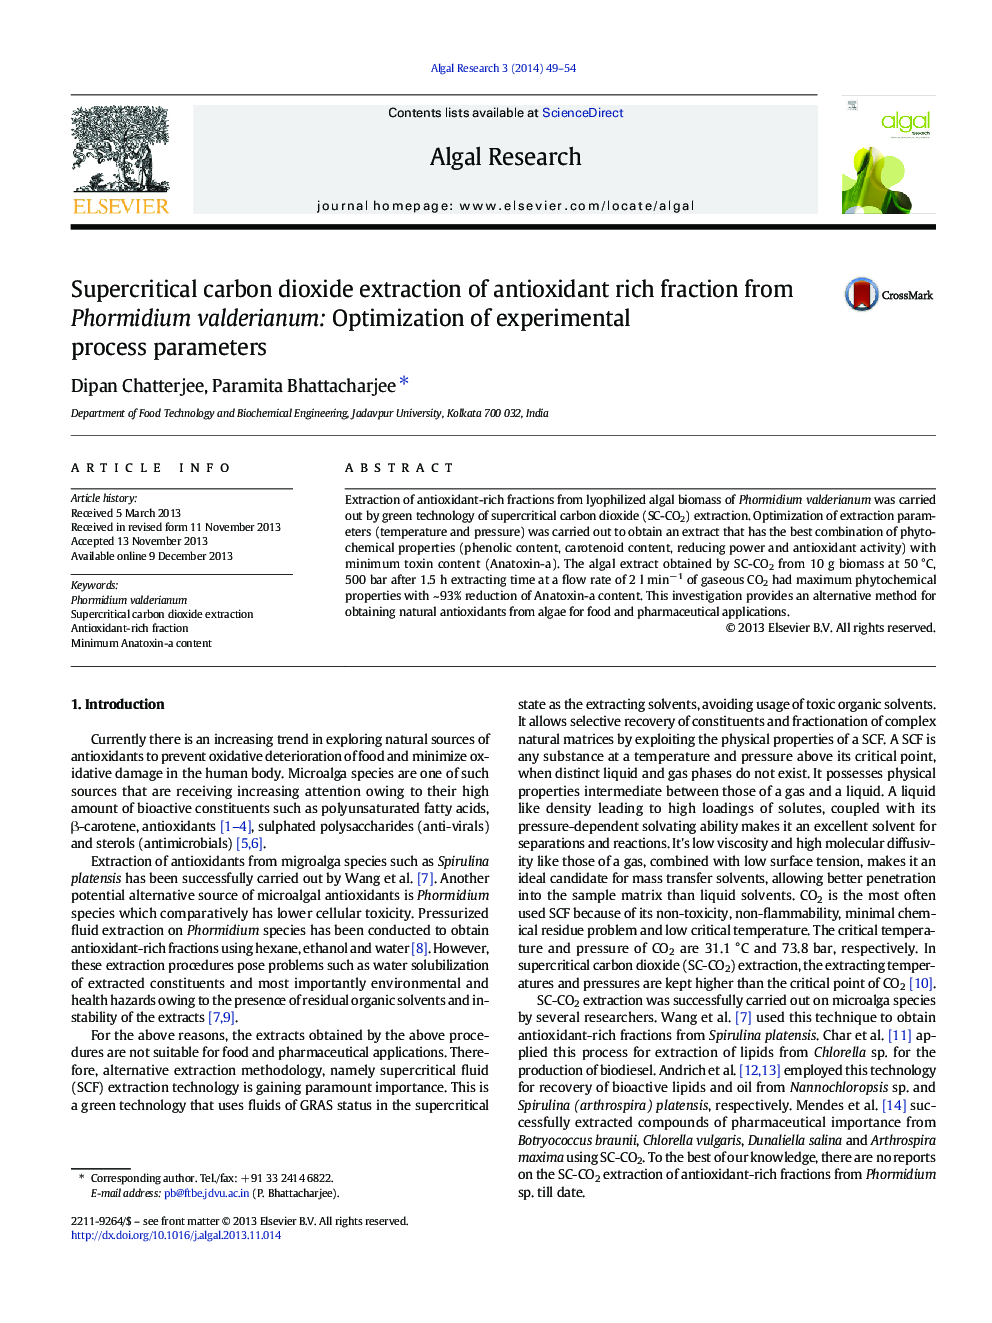 Supercritical carbon dioxide extraction of antioxidant rich fraction from Phormidium valderianum: Optimization of experimental process parameters